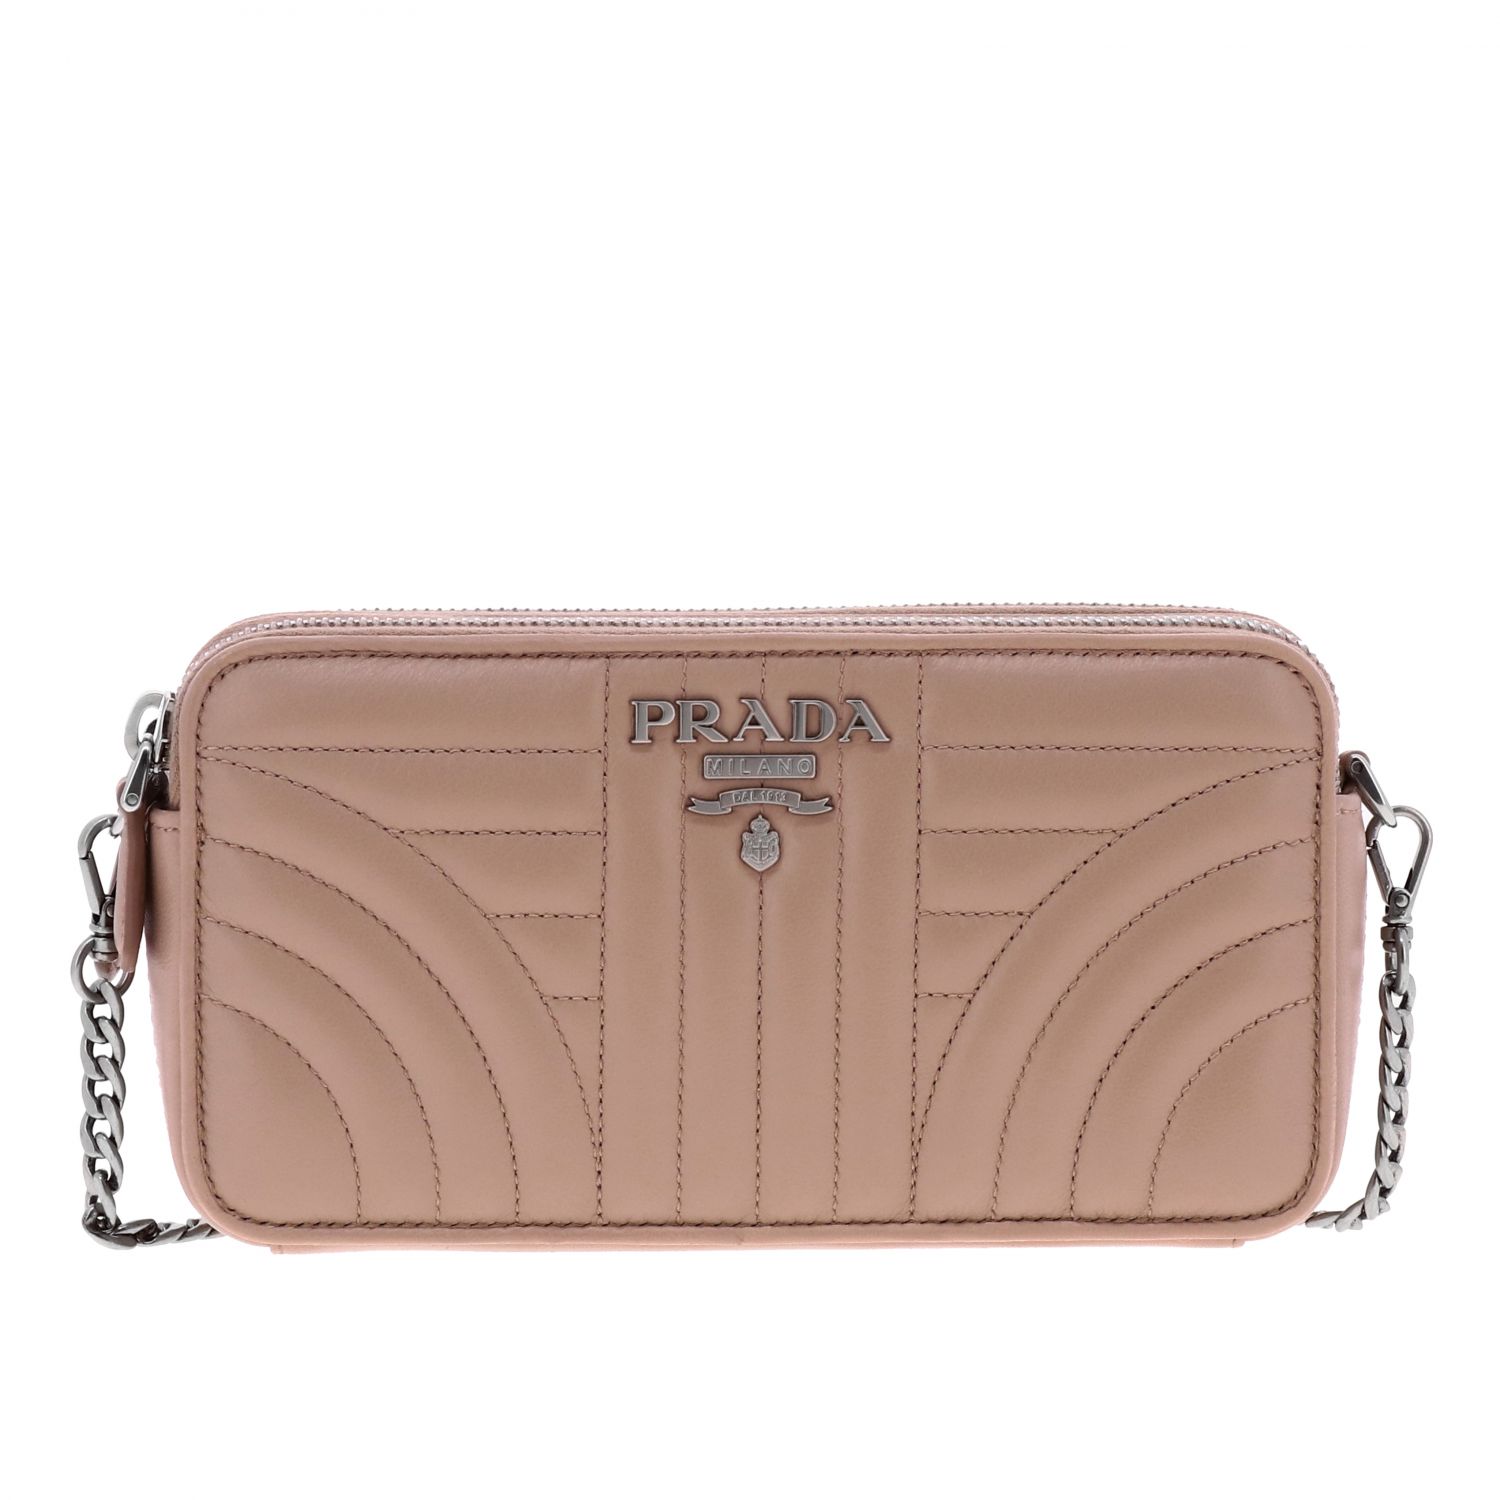 Prada Womens Leather Double Zipper Accent Clutch Pouch Handbag Beige S -  Shop Linda's Stuff